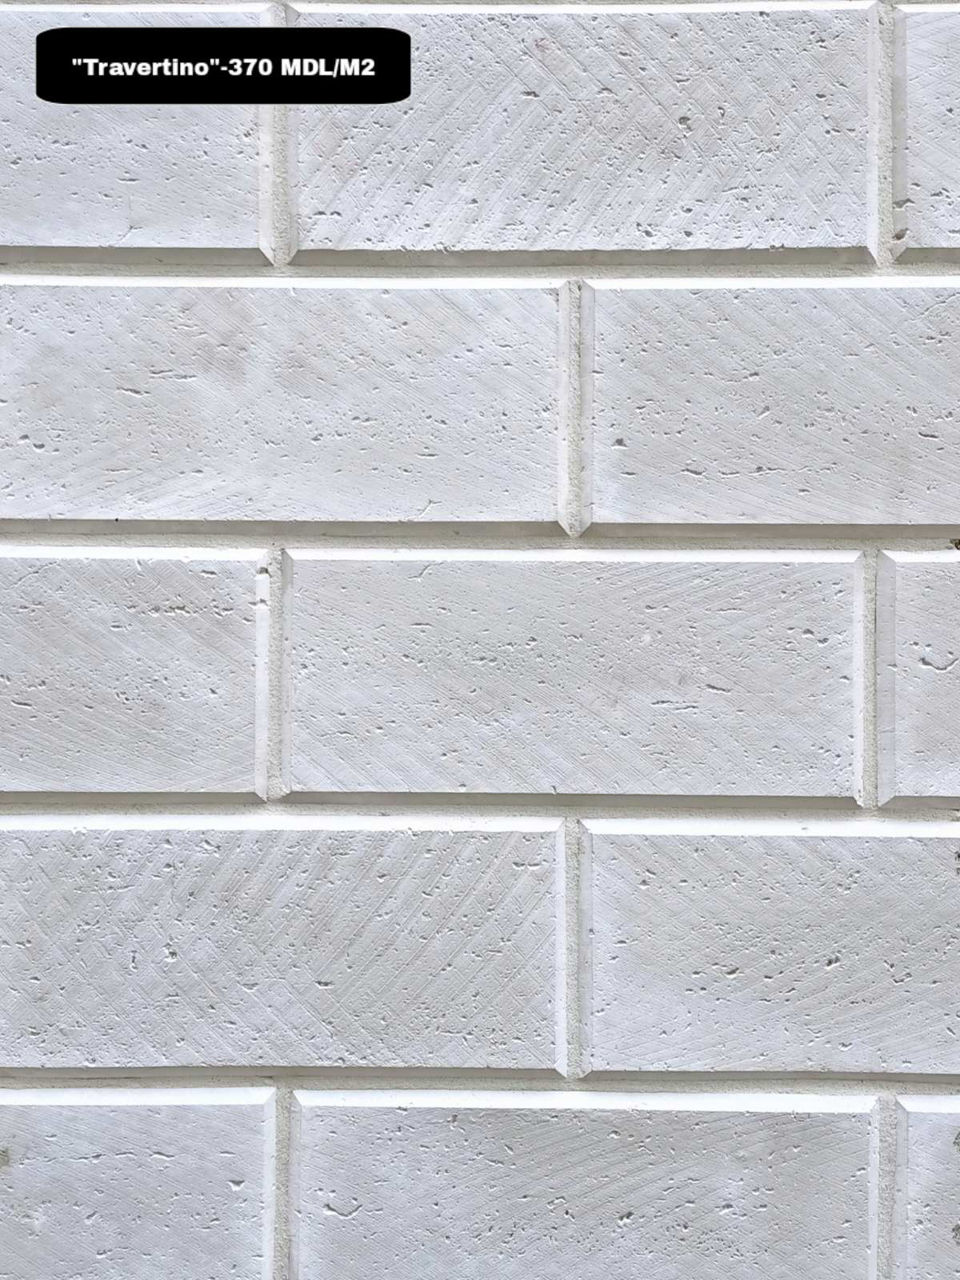 Piatra decorativa-beton.Декоративный камень из бетона.Producator "Decor Beton". foto 16